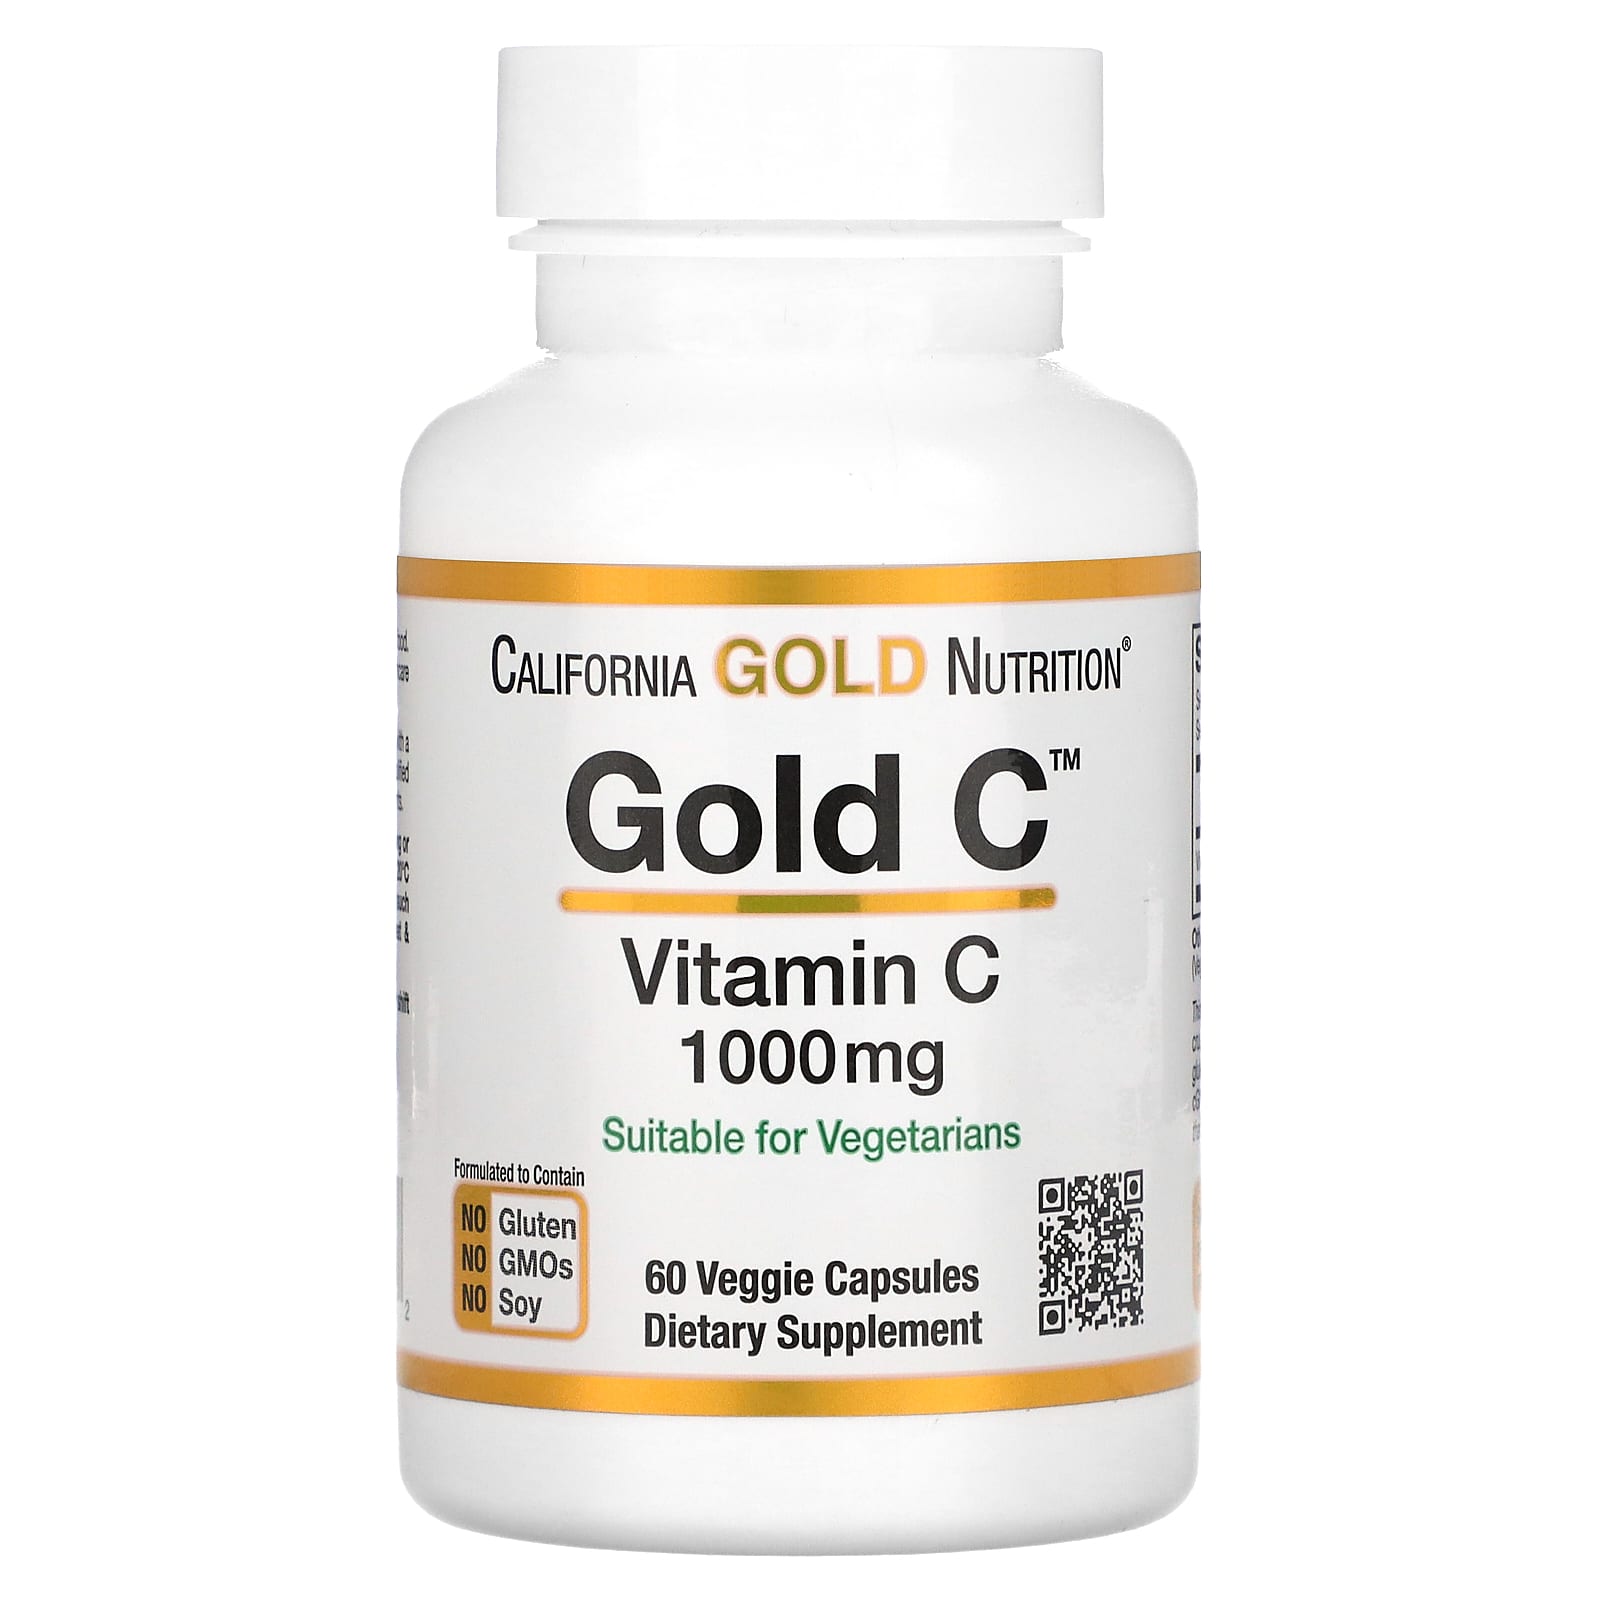 California Gold Nutrition Gold C USP Grade Vitamin C